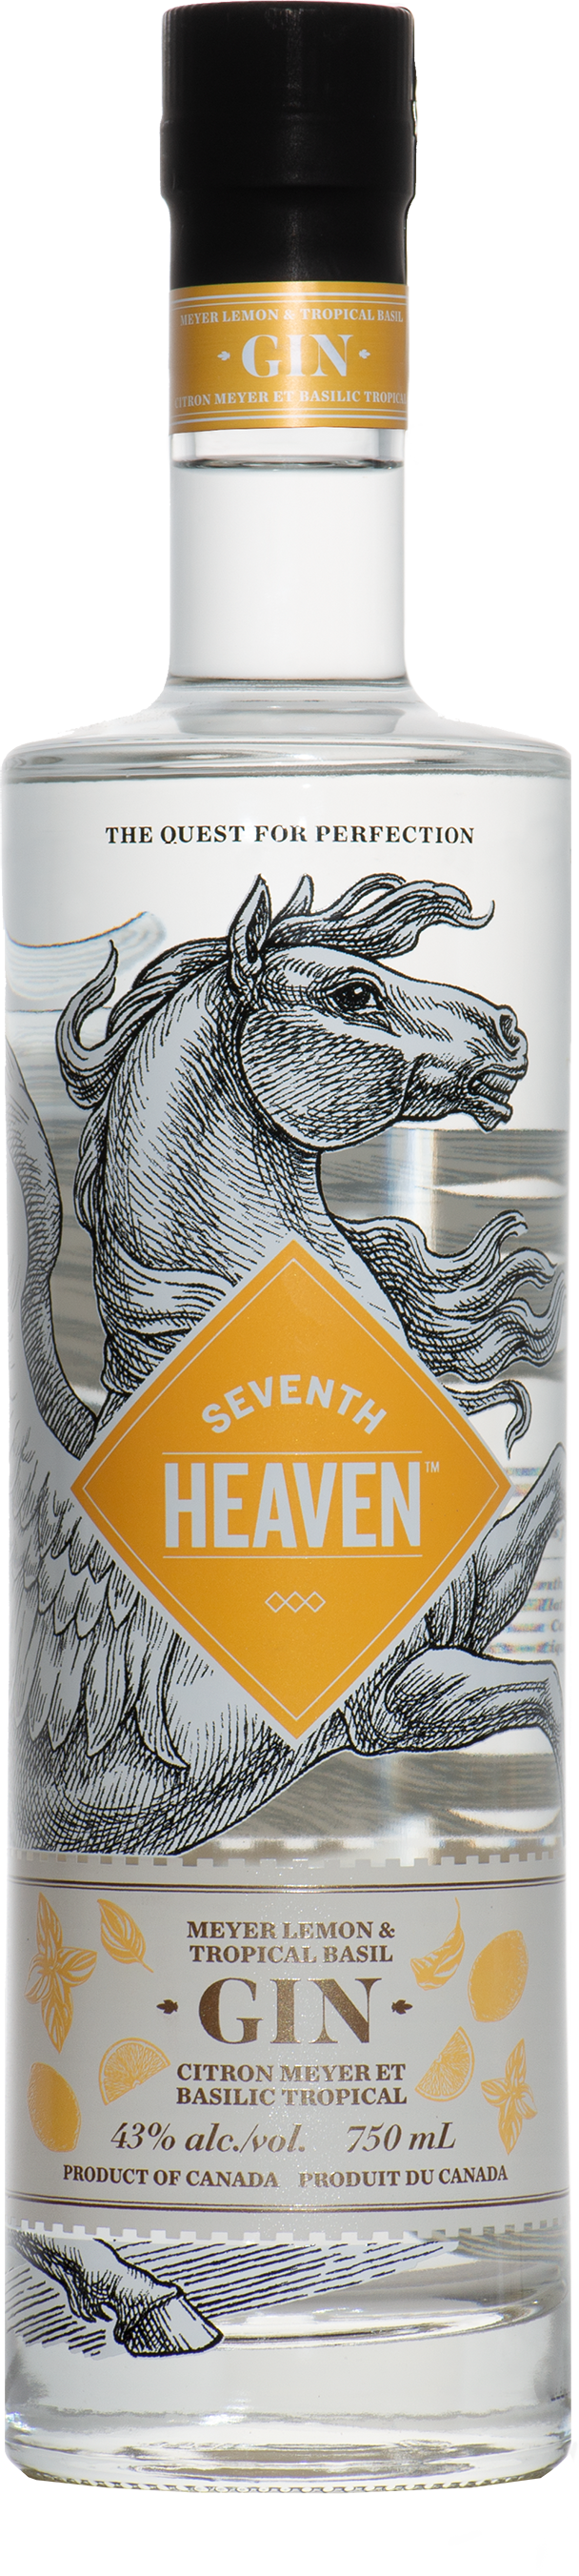 Seventh Heaven Gin Citron Meyer et basilic tropical